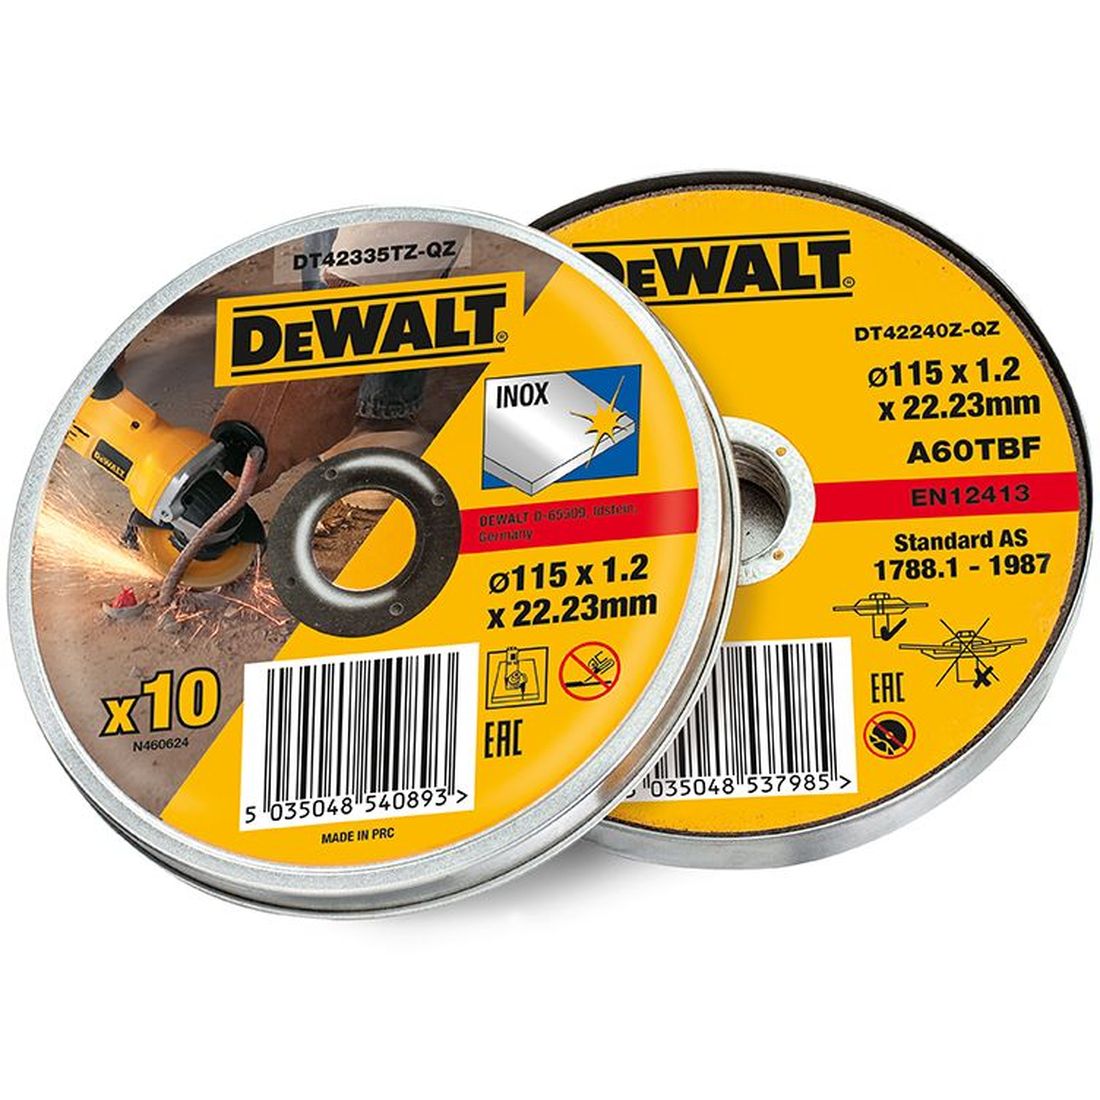 DEWALT DT42335TZ Inox Metal/Stainless Cutting Disc 115 x 1.2 x 22.23mm (Tin of 10)     